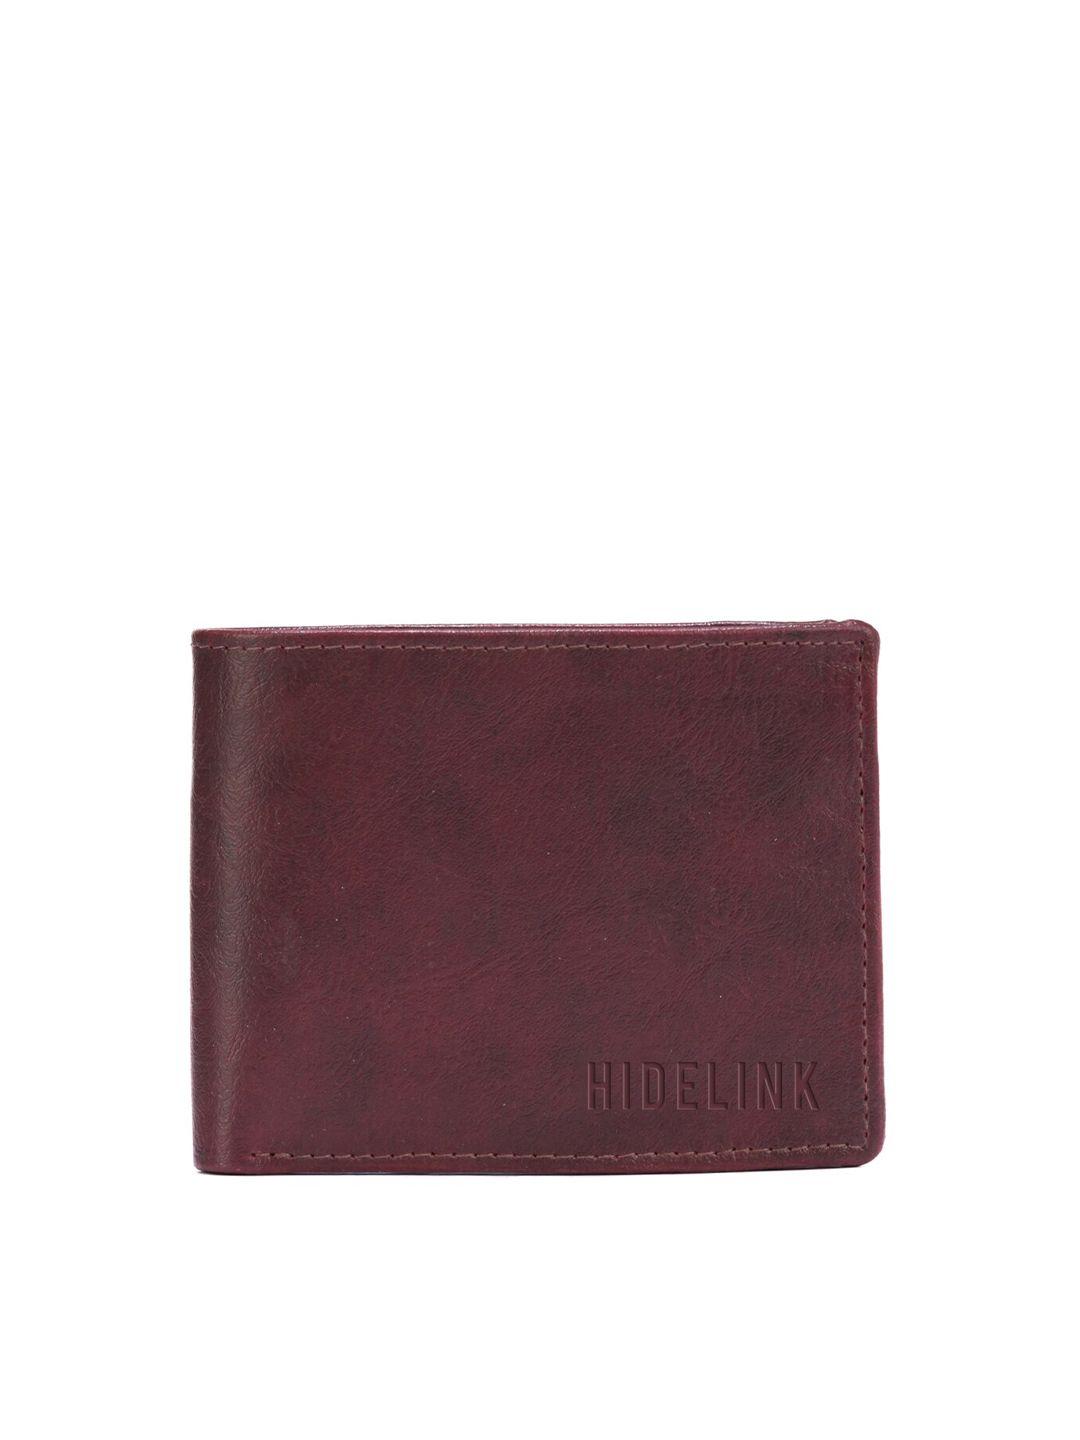 hidelink men brown pu two fold wallet